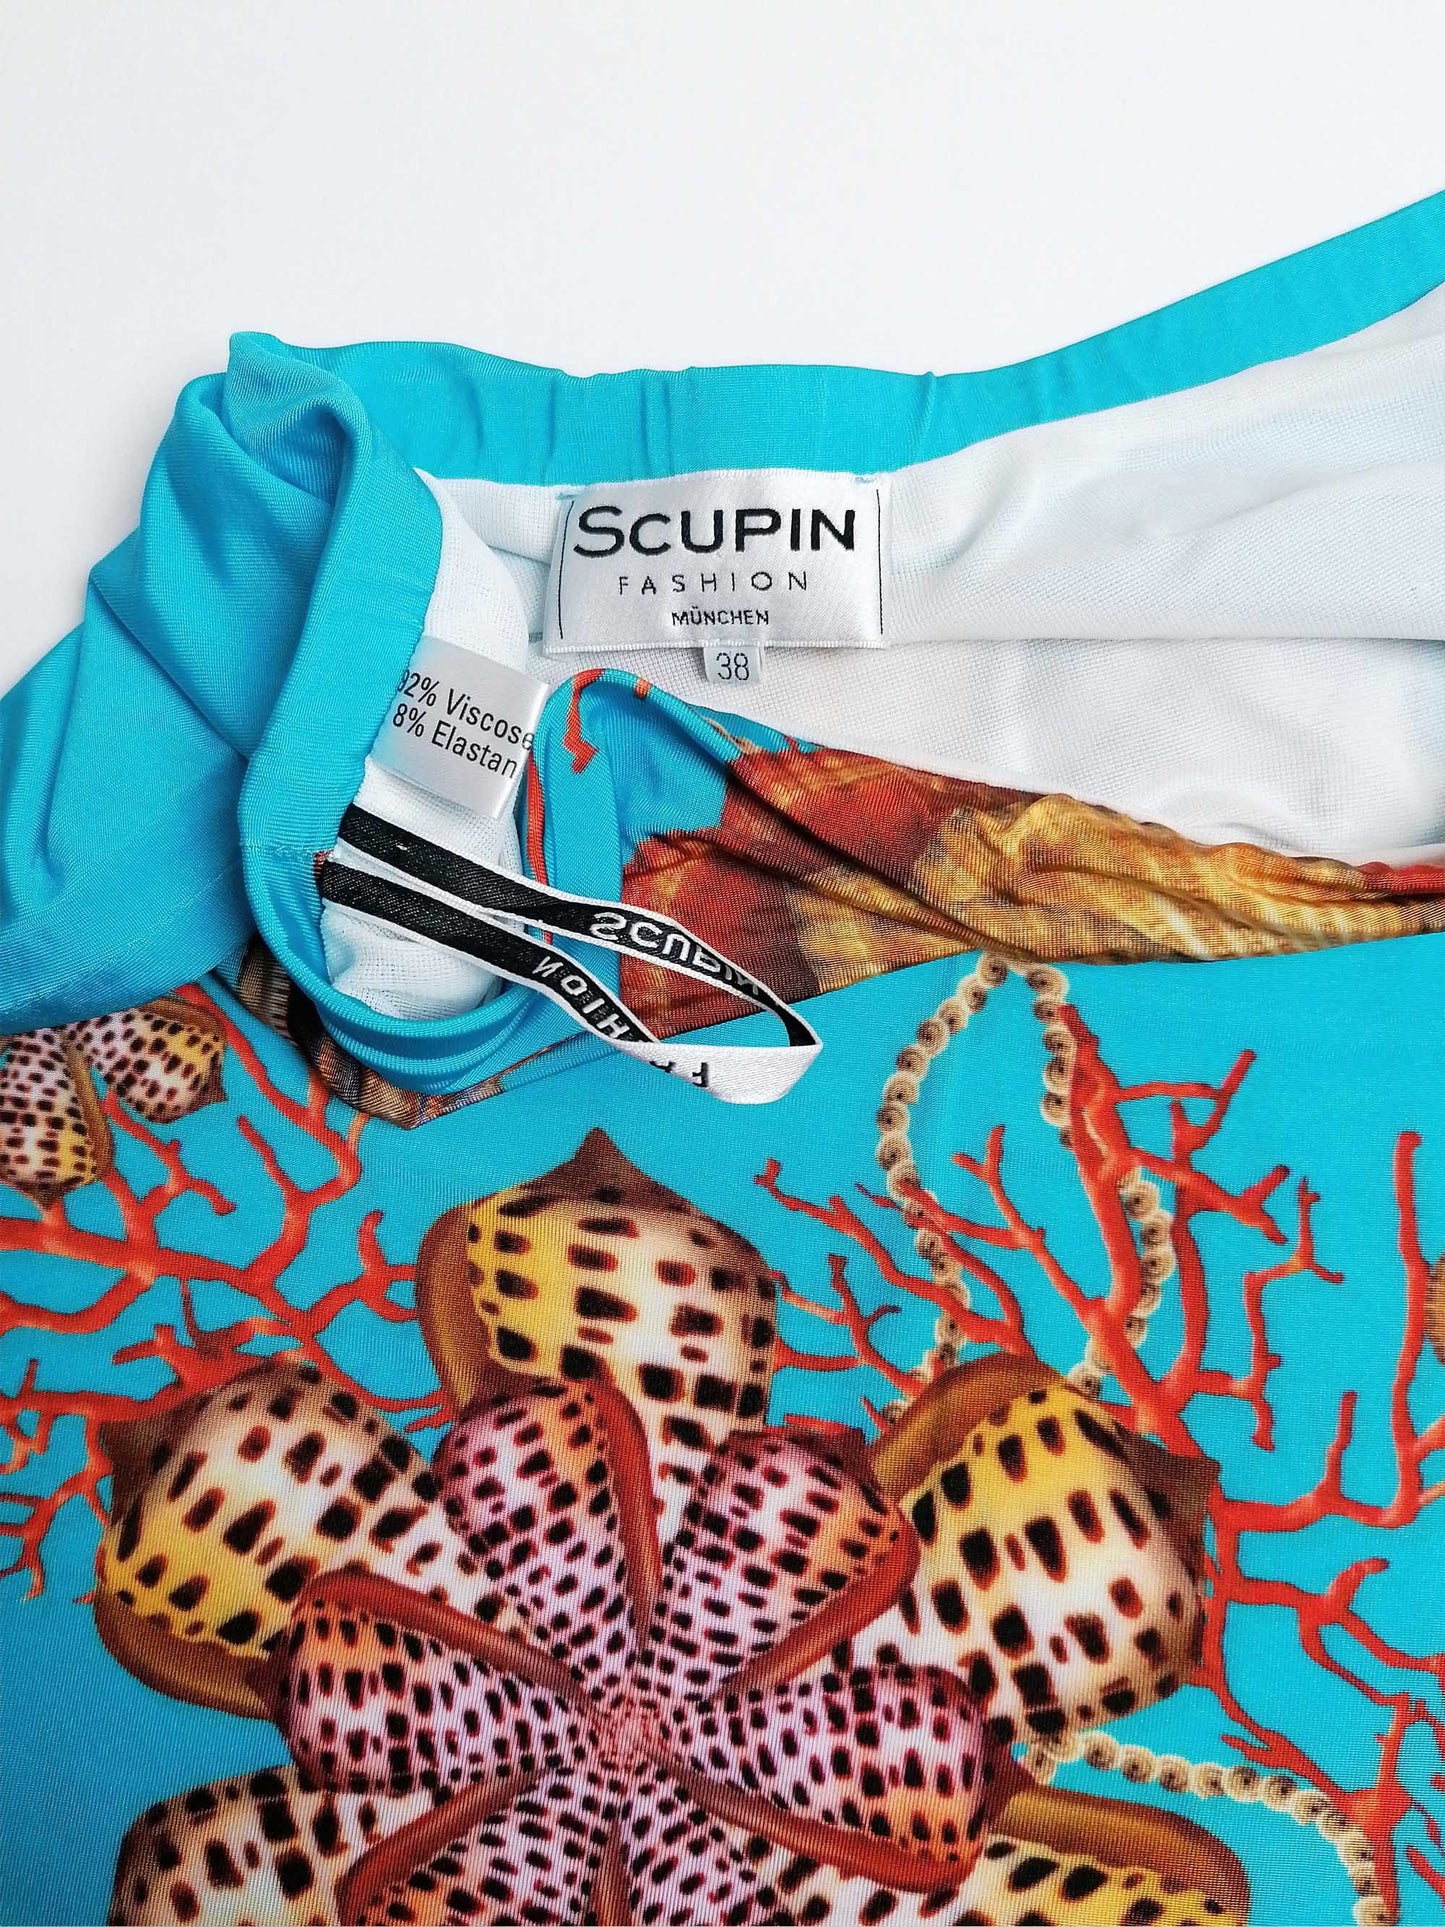 SCUPIN Fashion Munchen Stretch Pencil Skirt Seashells Print - size S-M